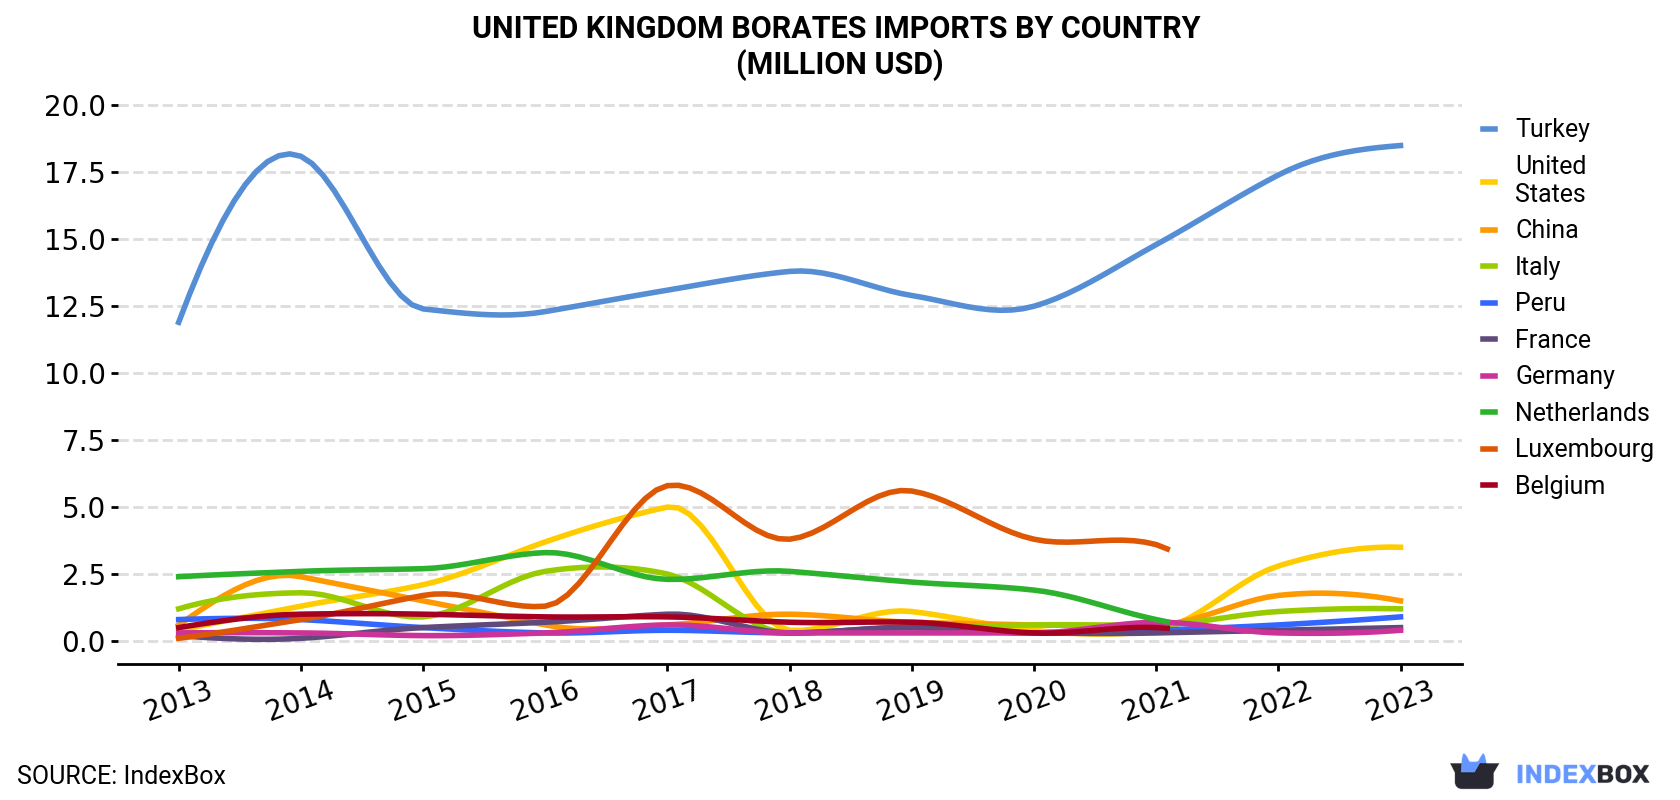 United Kingdom Borates Imports By Country (Million USD)